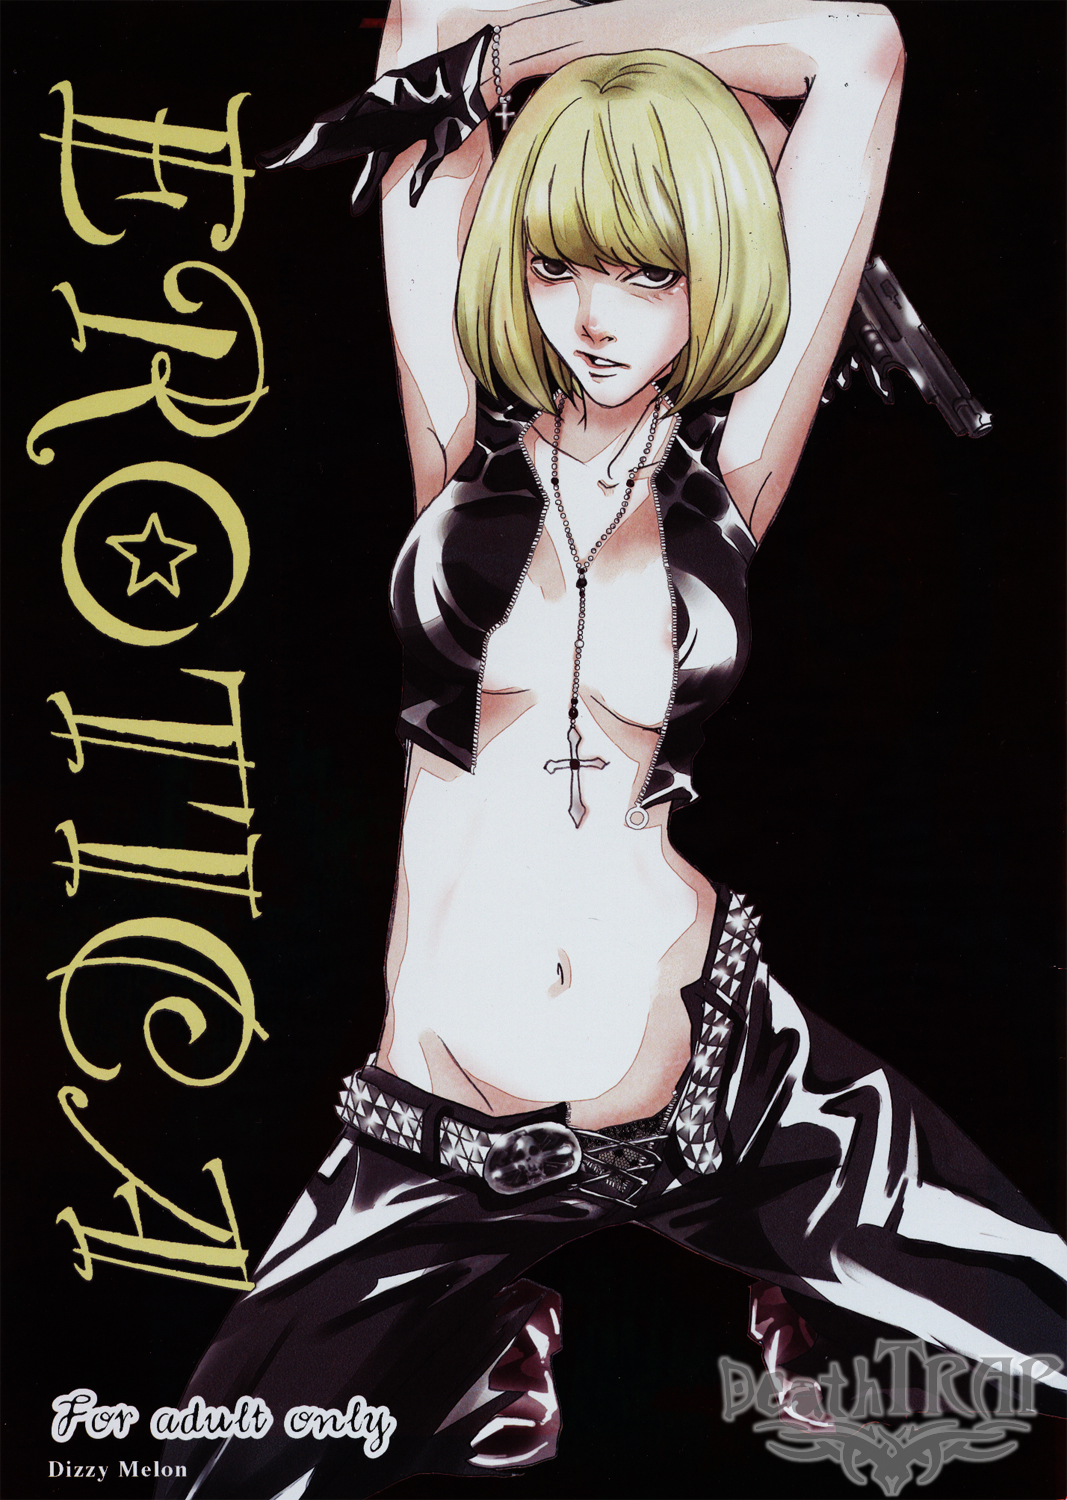 Dizzy Melon Araya Erotica Death Note English 746844 0001